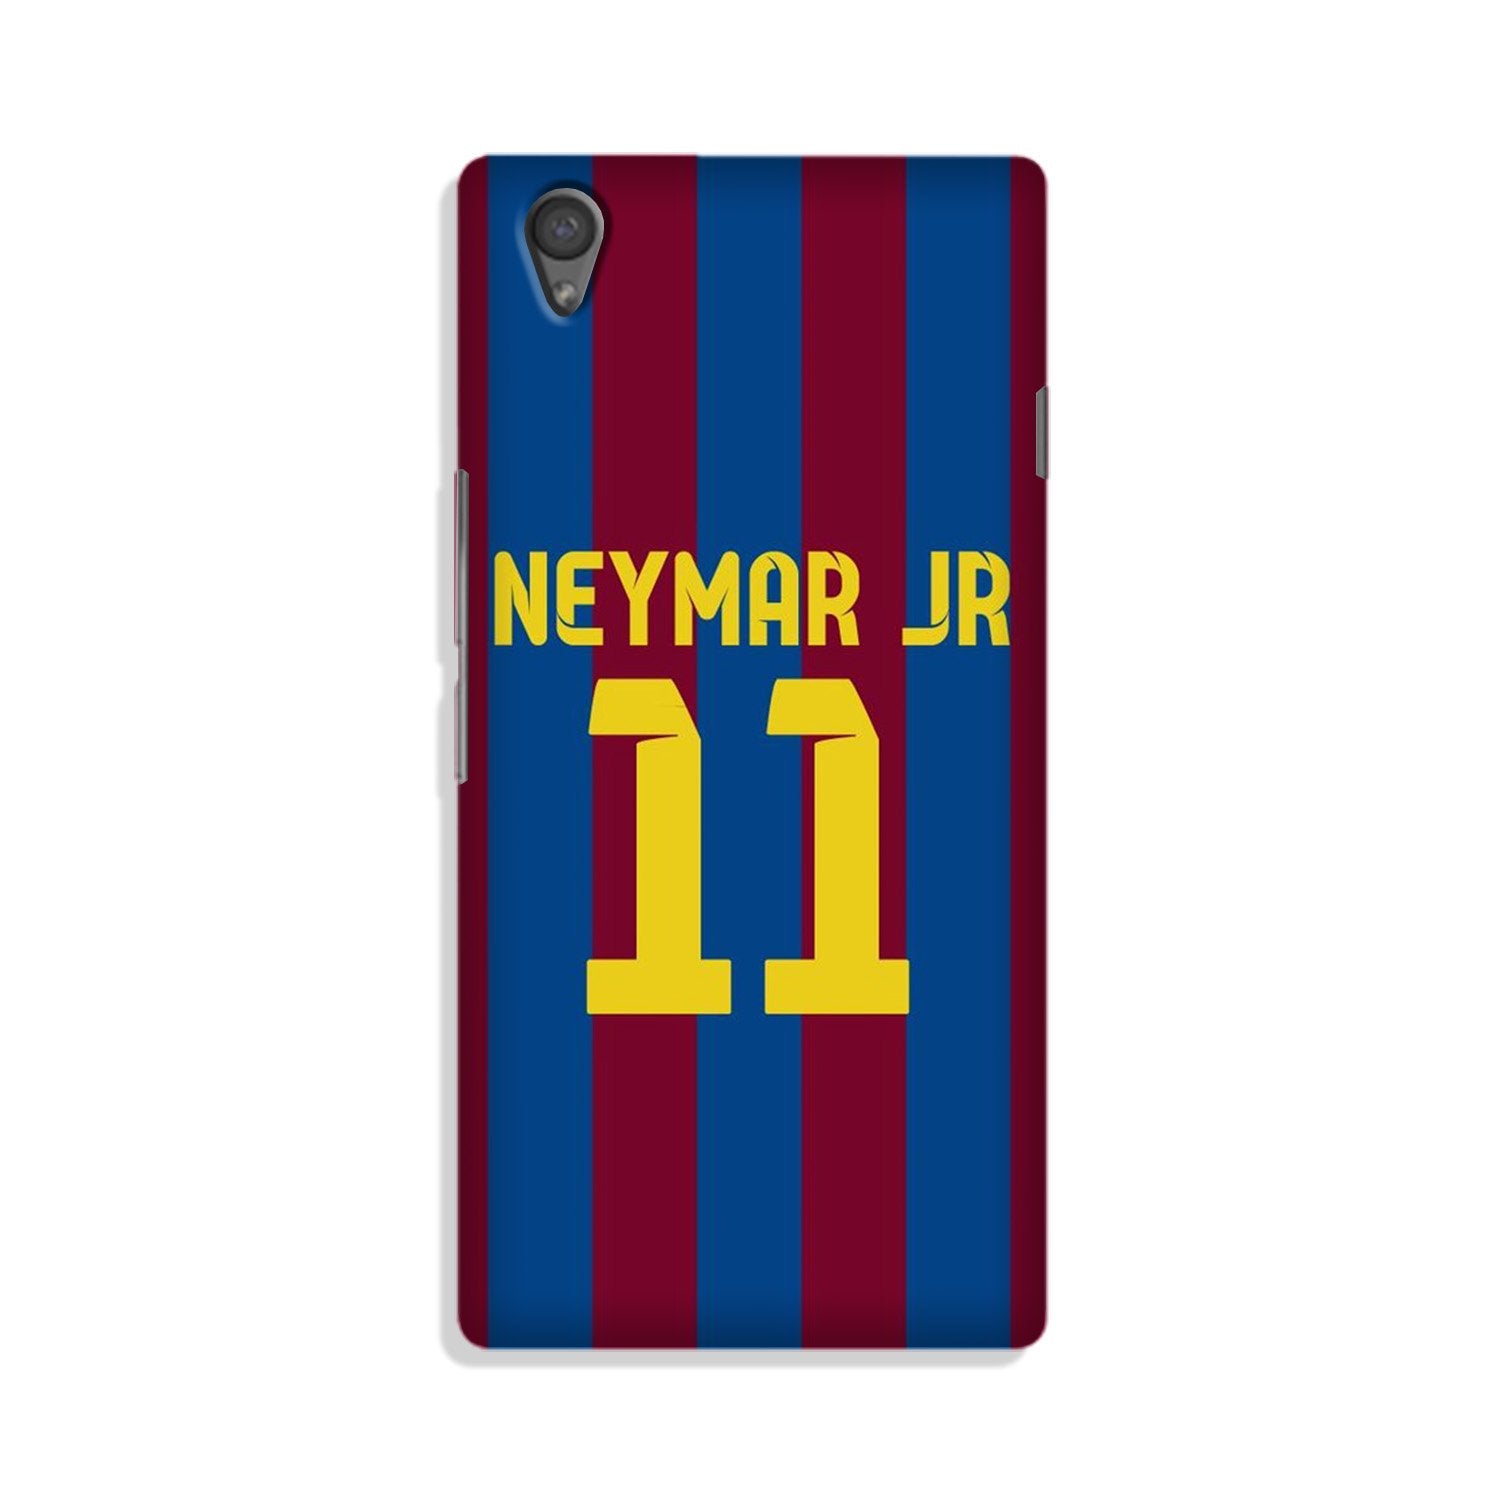 Neymar Jr Case for Vivo Y51L  (Design - 162)